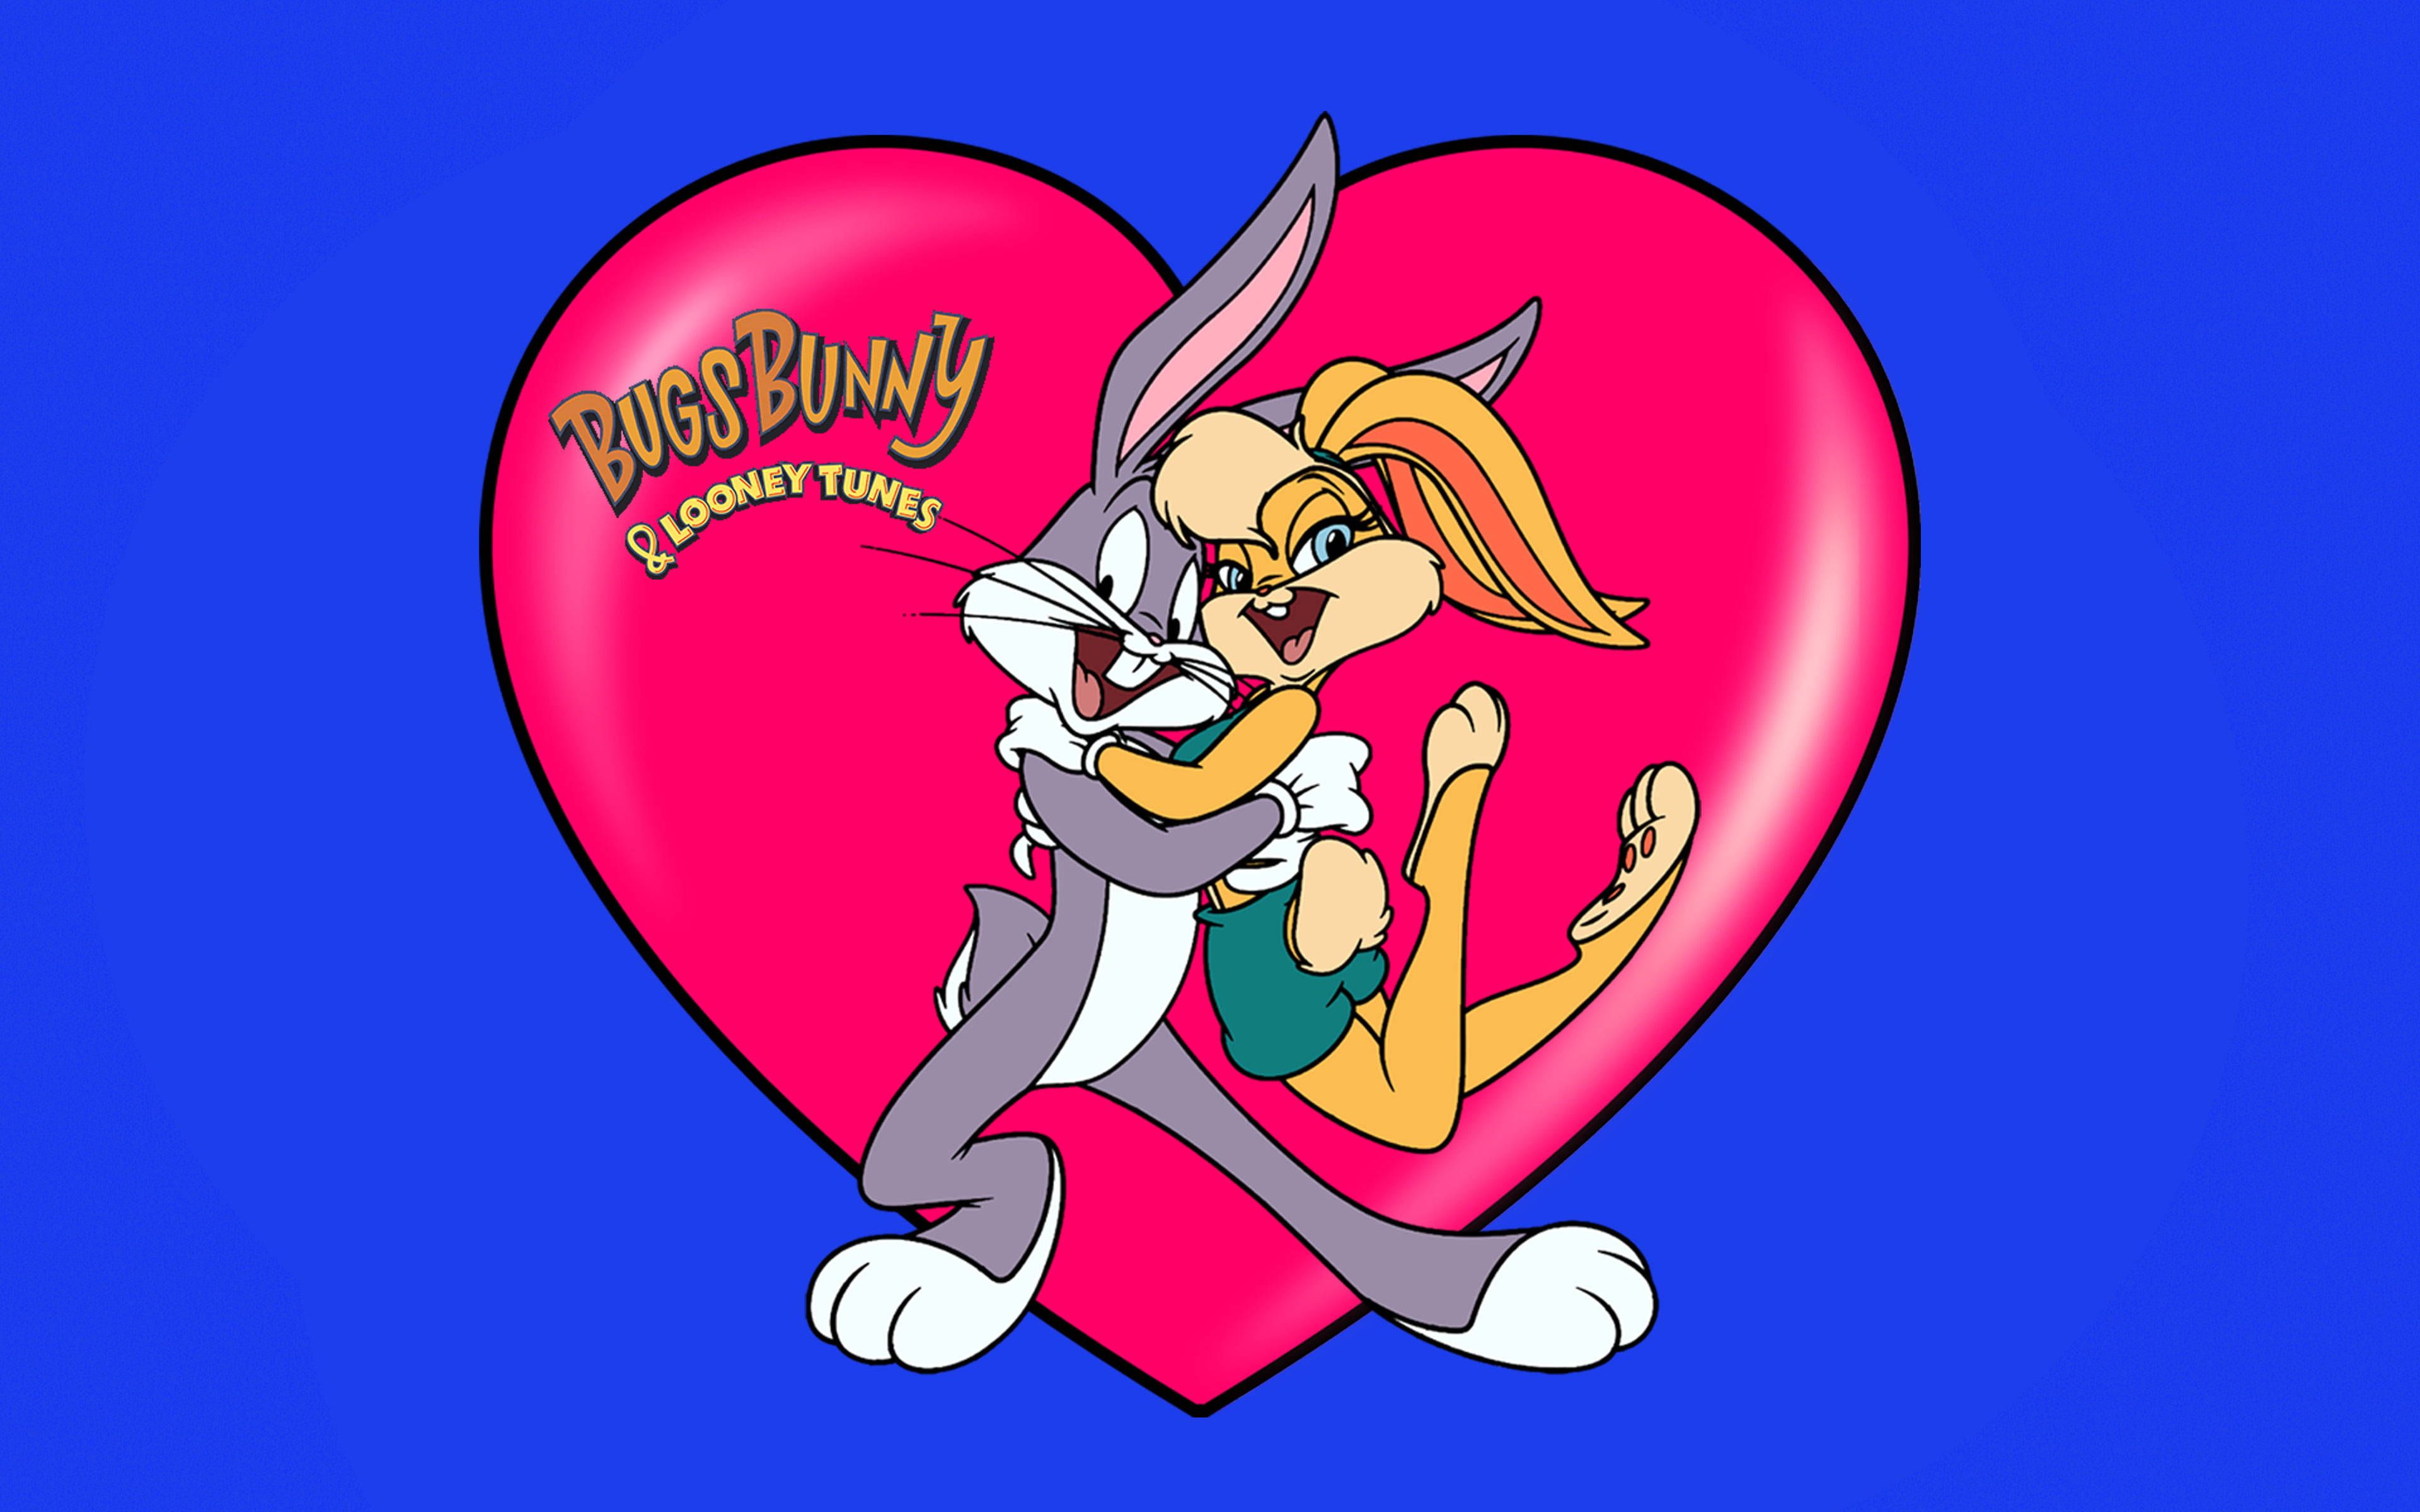 A cartoon character is holding an animated heart - Bugs Bunny